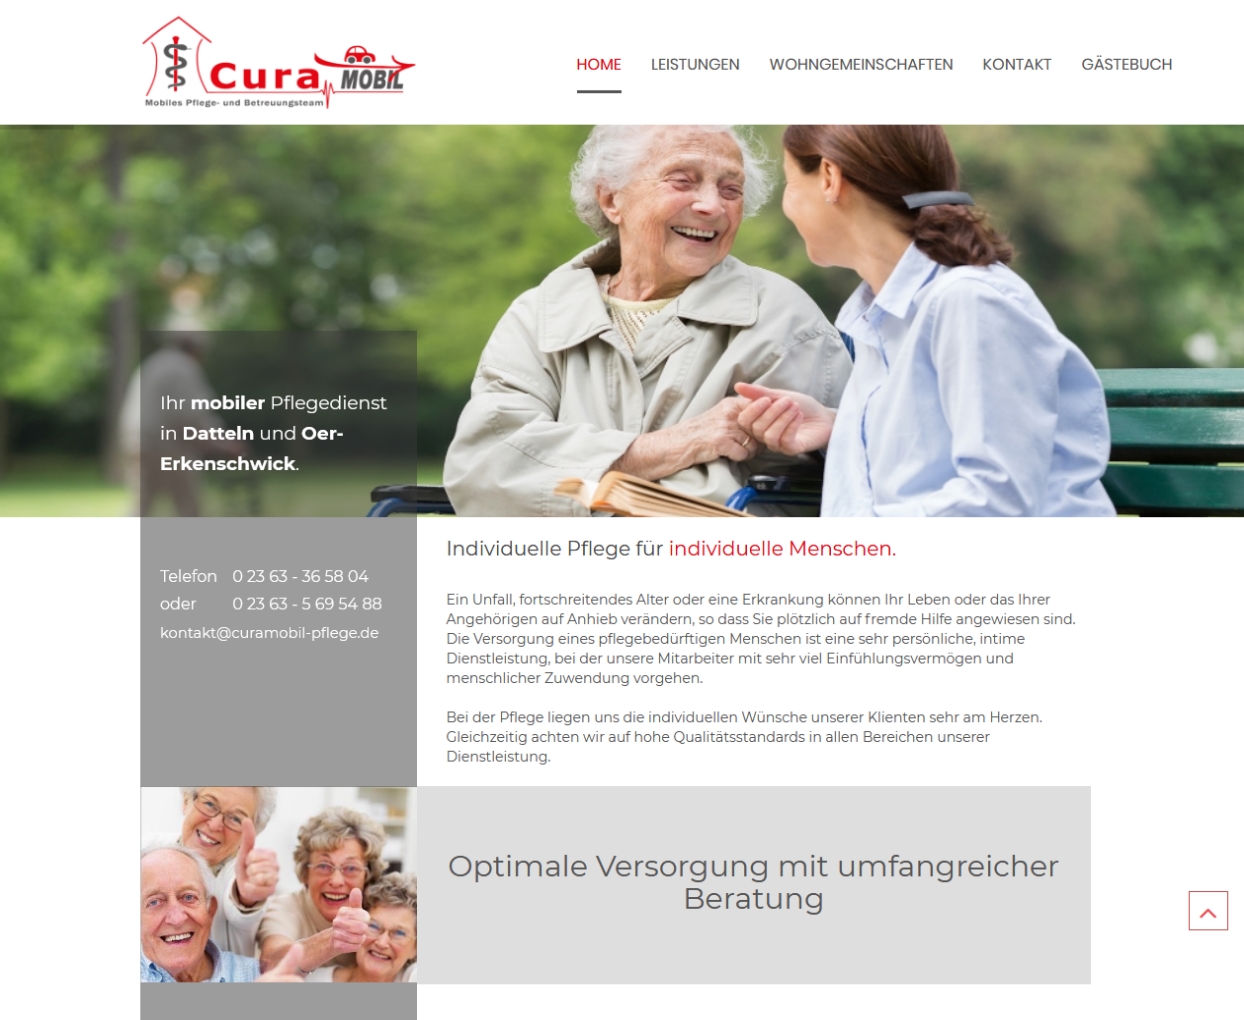 Cura Mobil GmbH - Mobiler Pflegedienst